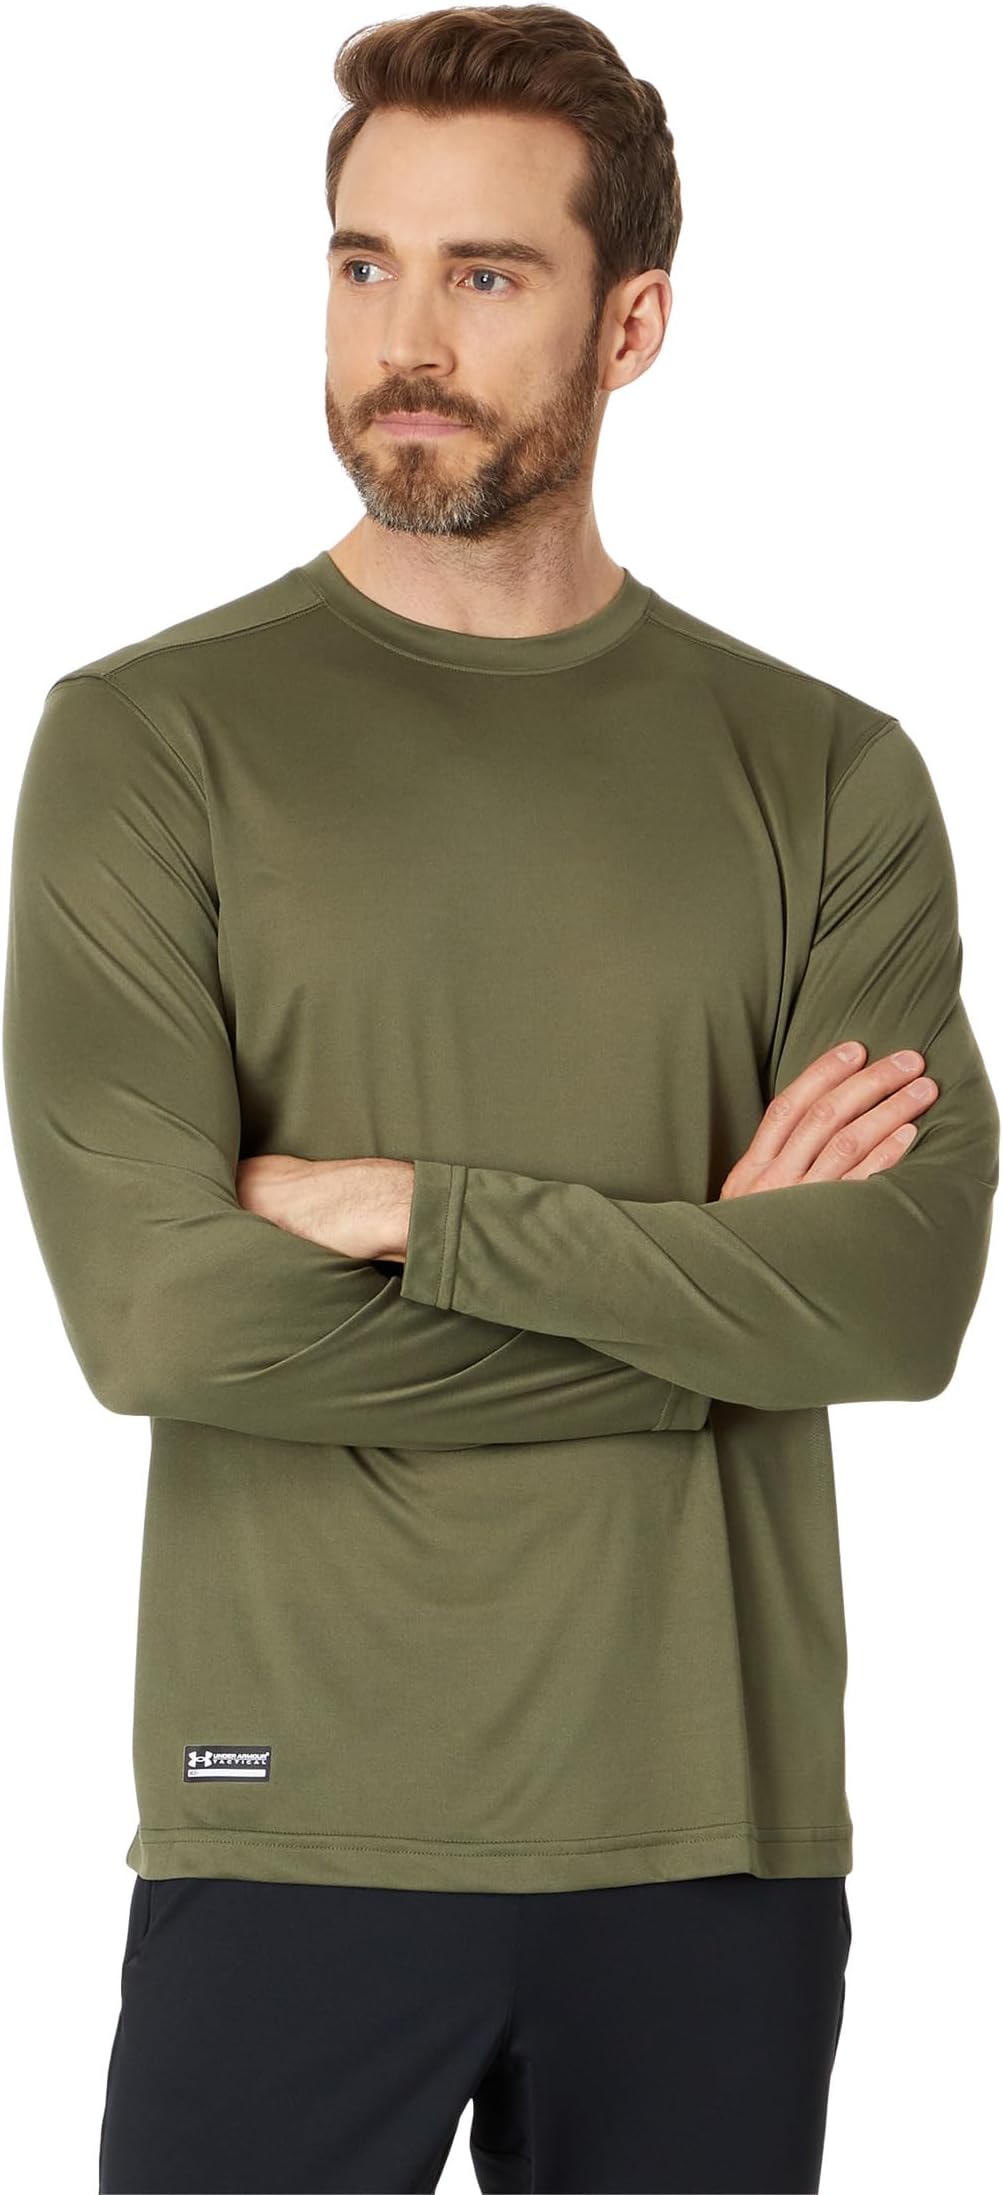 Футболка с длинными рукавами UA Tac Tech Under Armour, цвет Marine OD Green футболка с короткими рукавами ua tech under armour цвет marine od green black